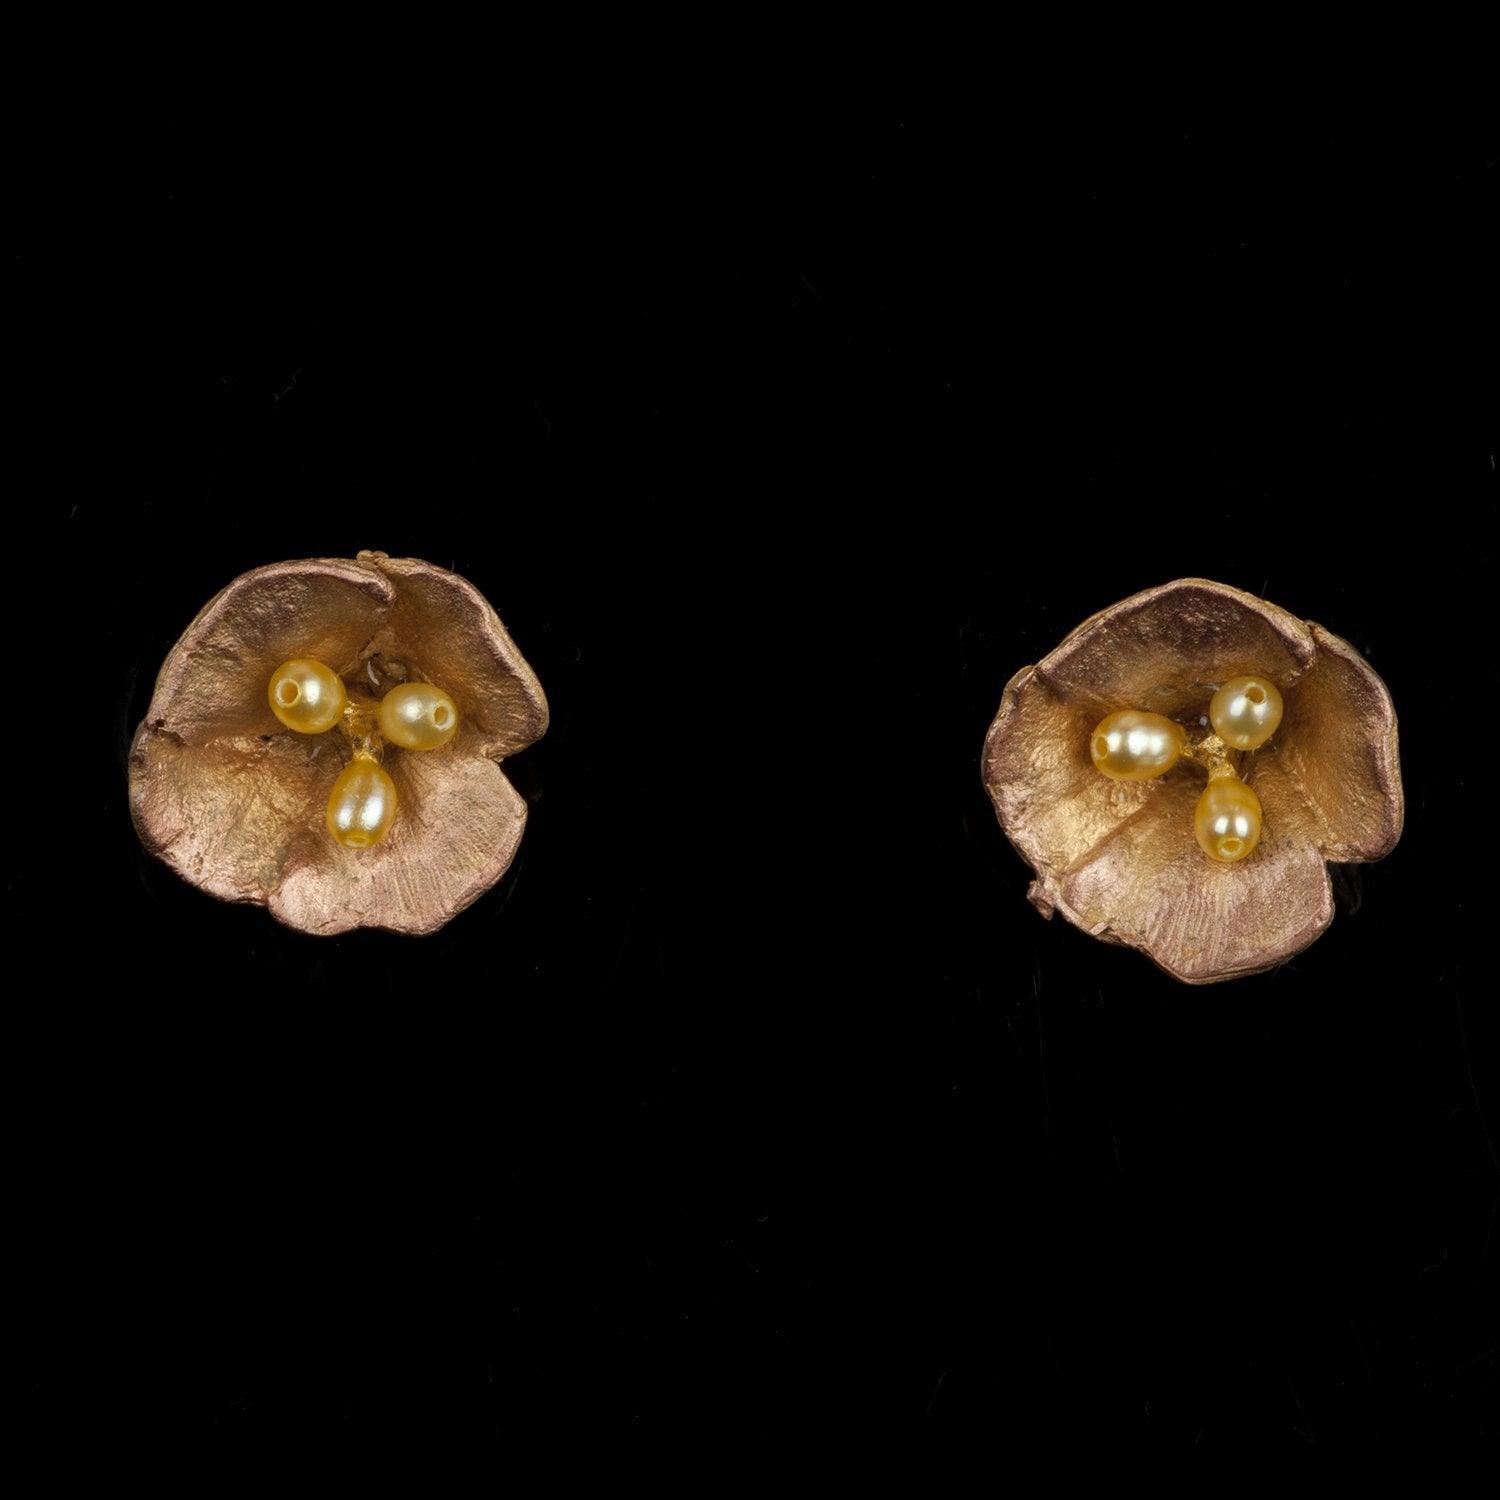 California Poppy Earrings - Petite Post - Michael Michaud Jewellery